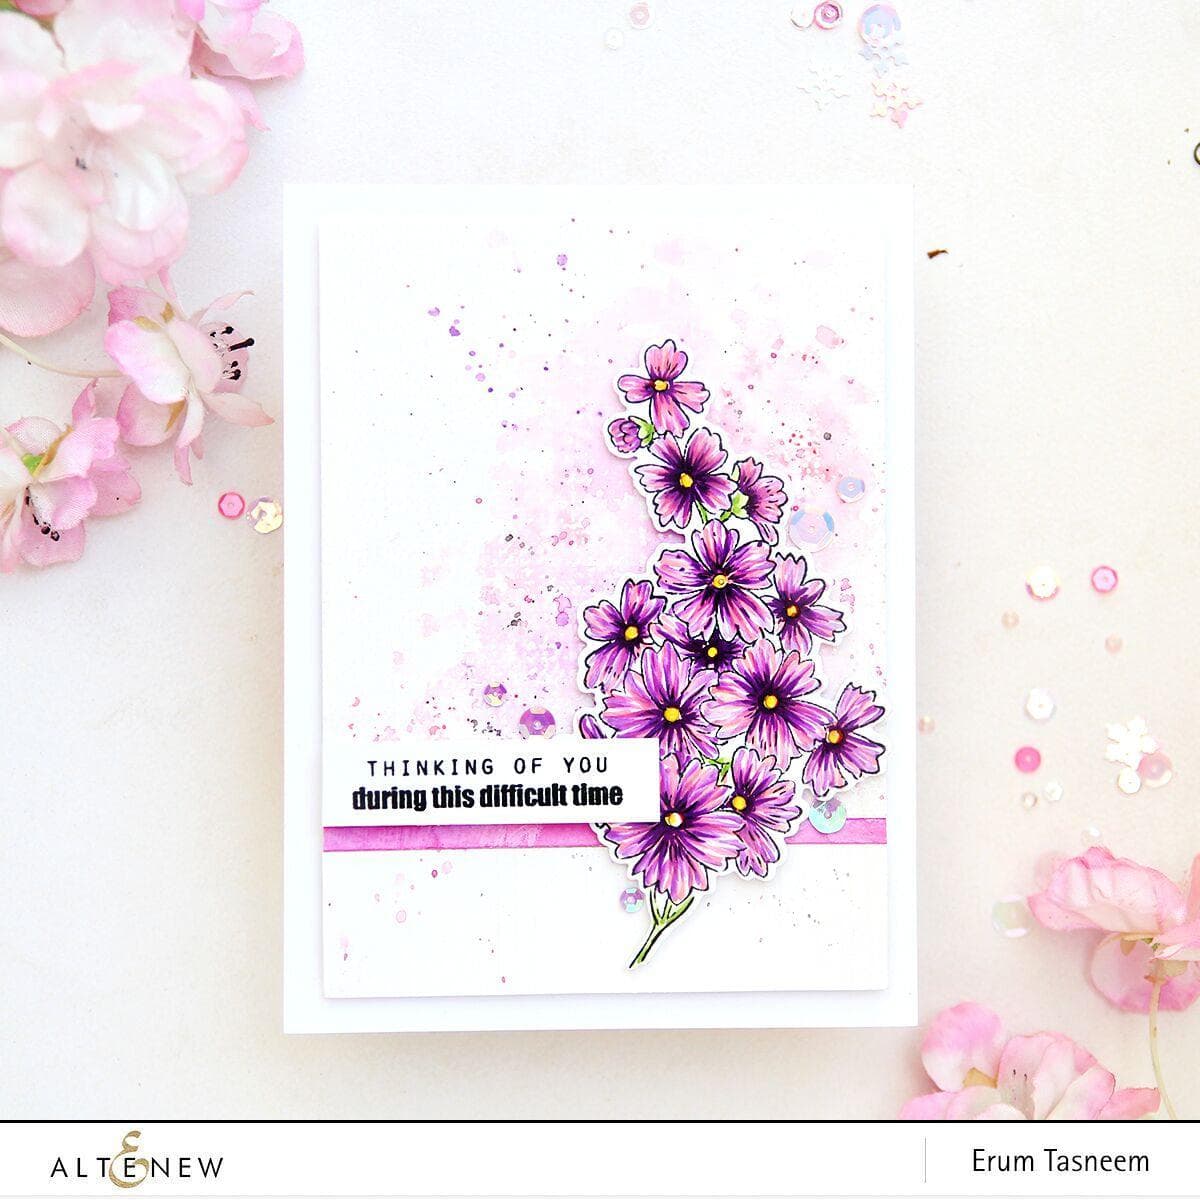 Altenew Lilac Blossoms 6 Crisp Dye Ink Mini Cube Set